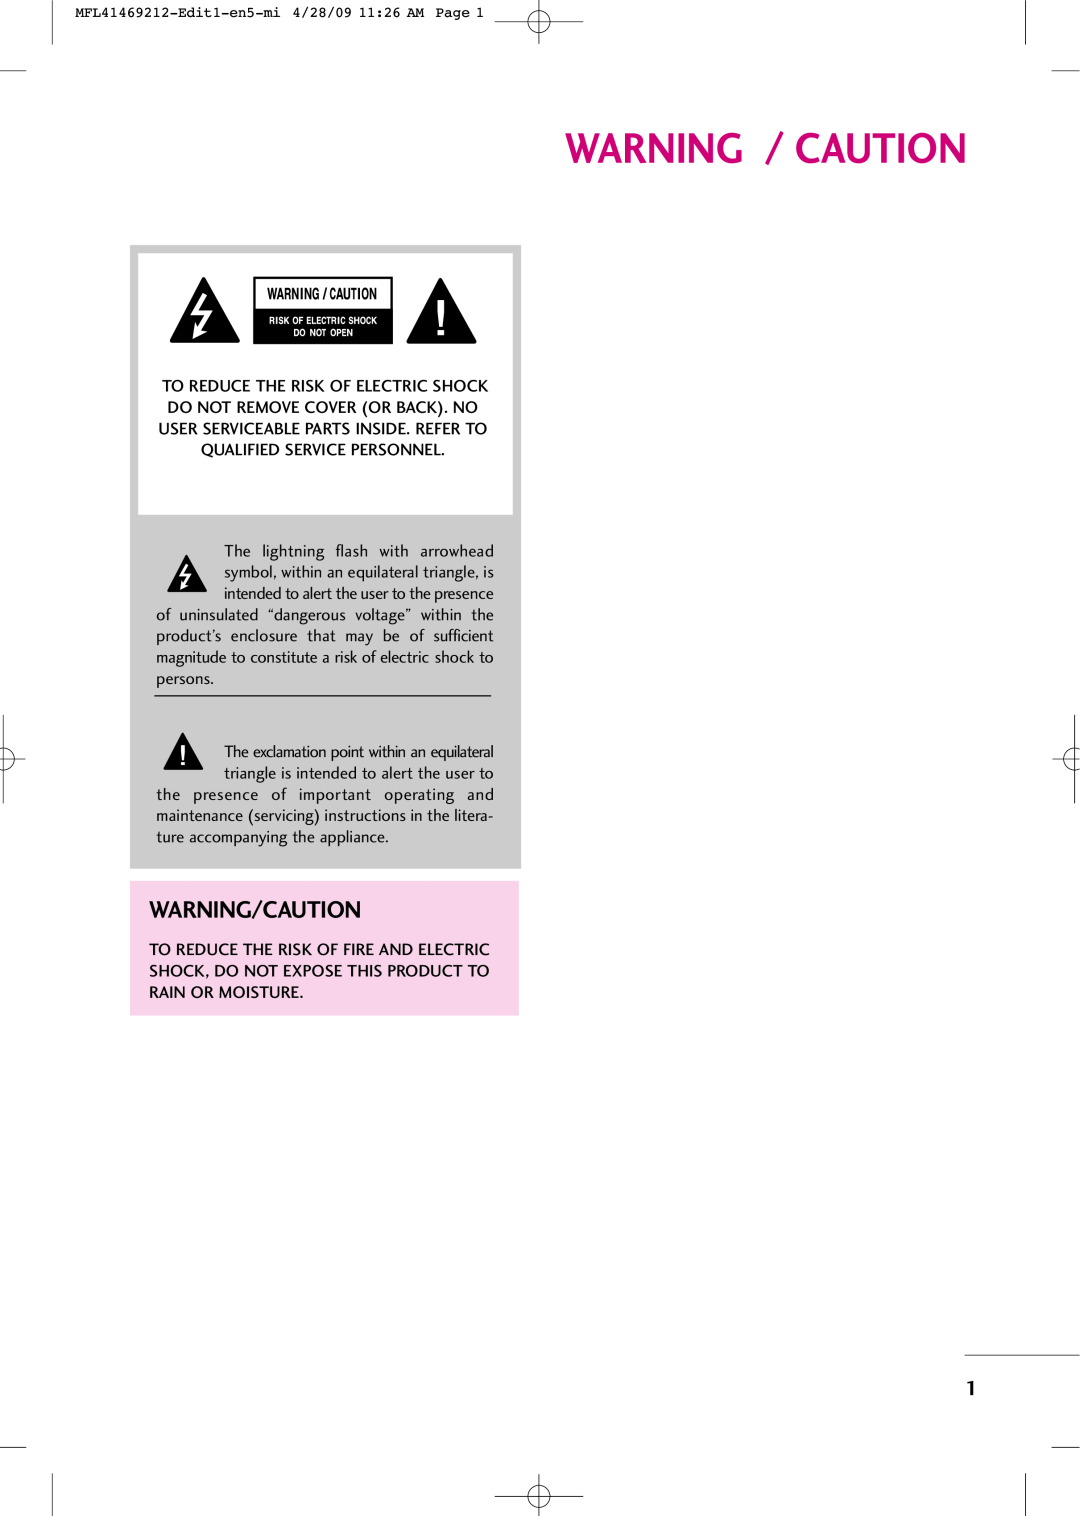 LG Electronics 2230R-MA manual Warning/Caution, Warning / Caution 